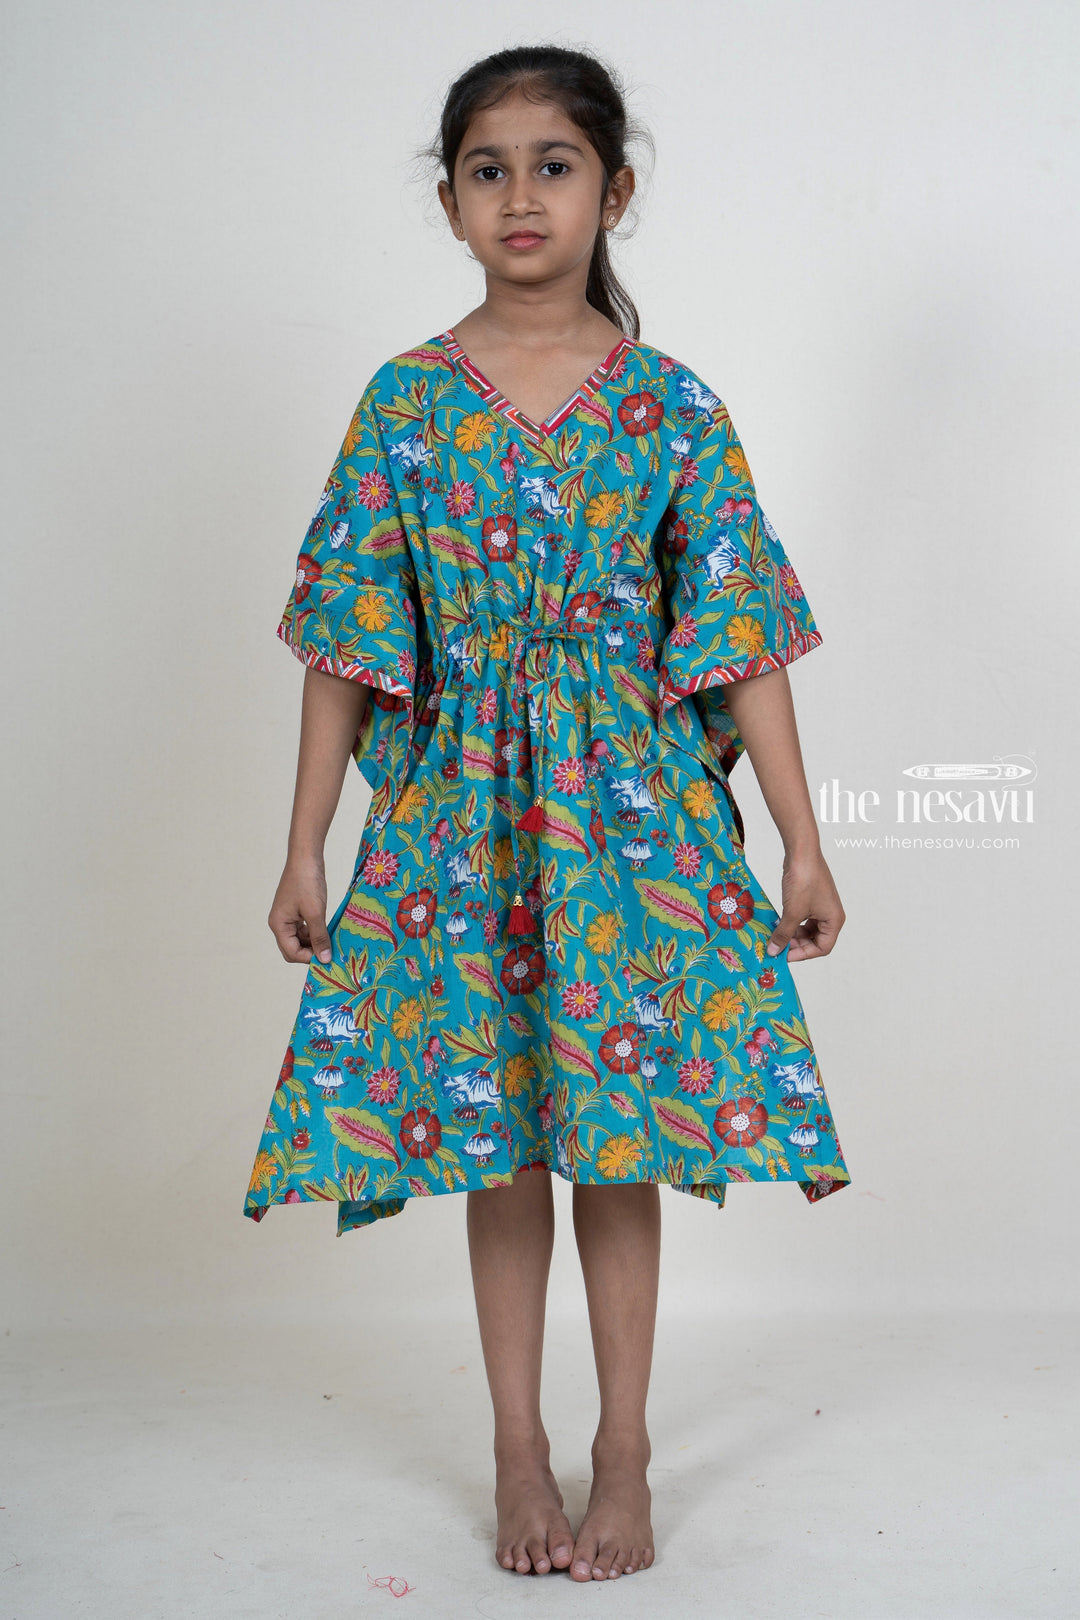 The Nesavu Frocks & Dresses Soft Jaipuri Cotton Kaftan Dresses For Kid Girls psr silks Nesavu